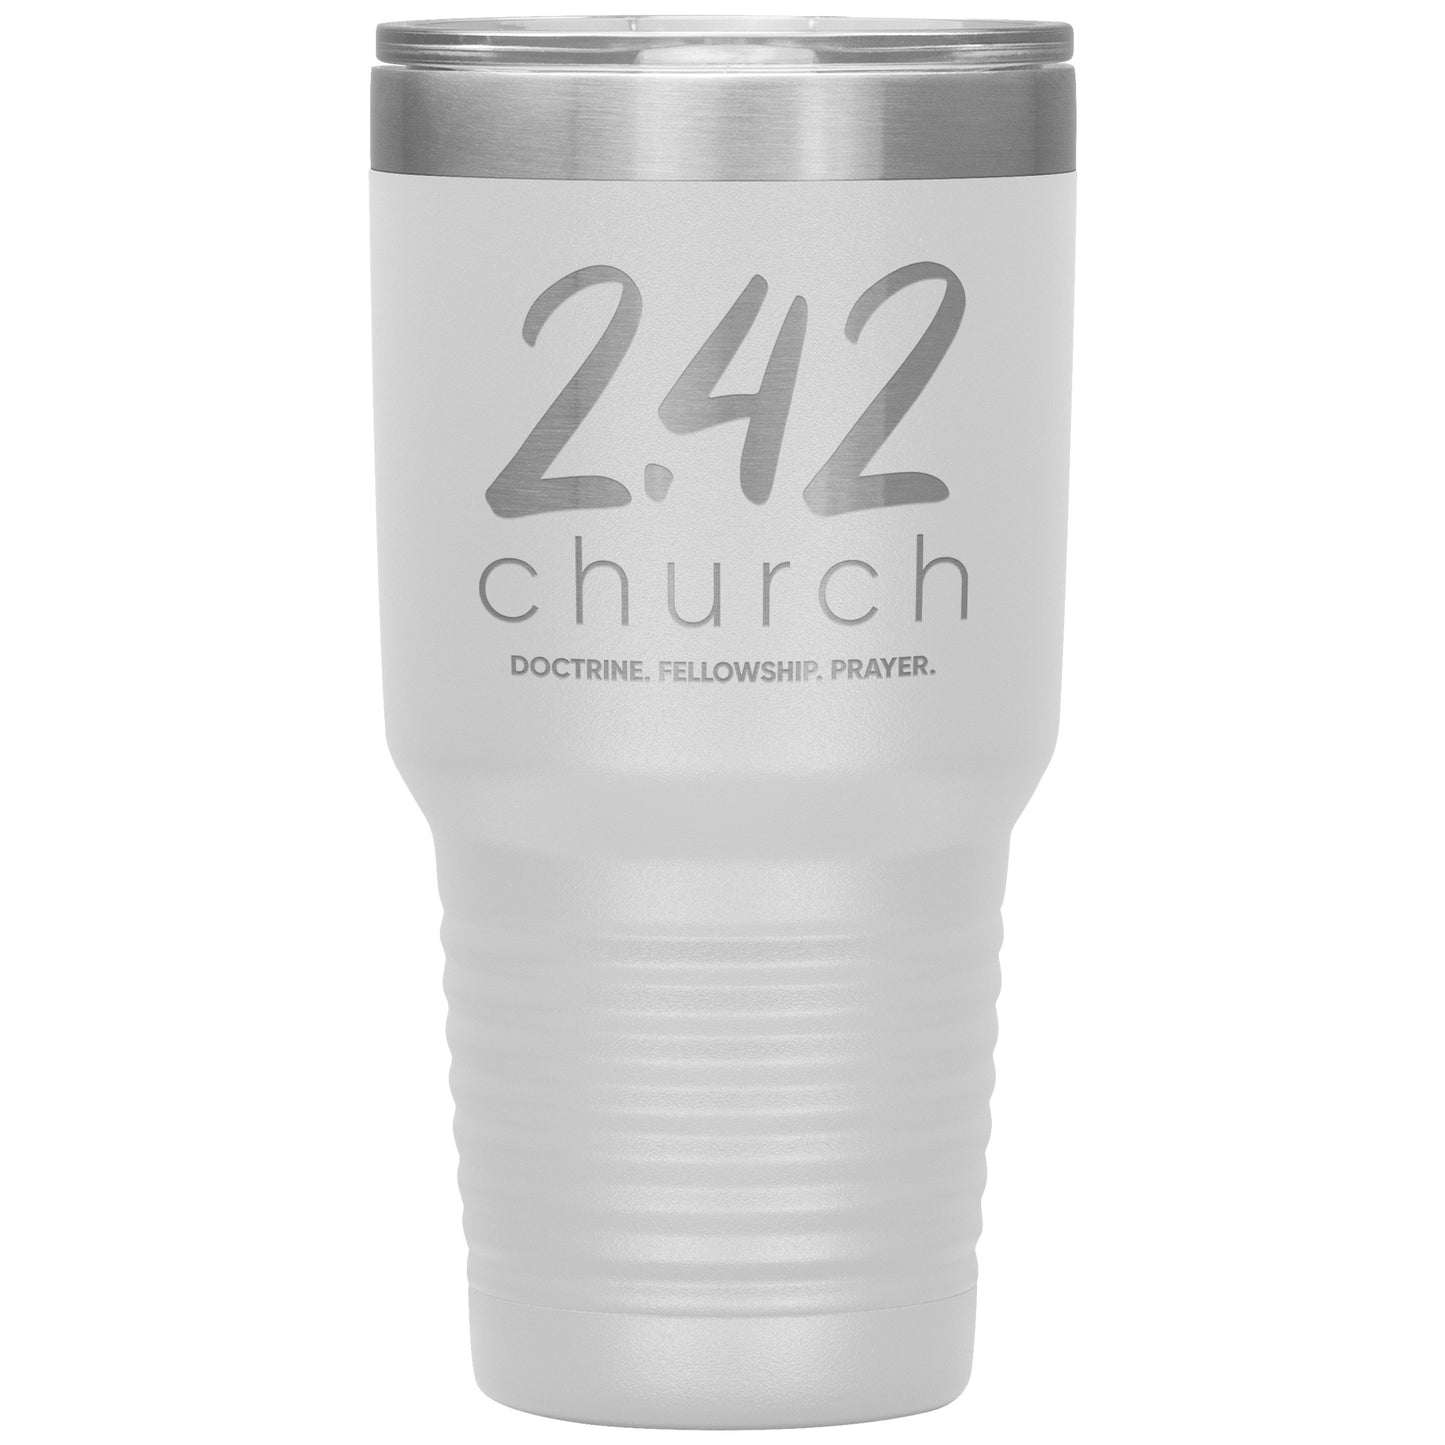 2.42 Church Insulated Tumblers